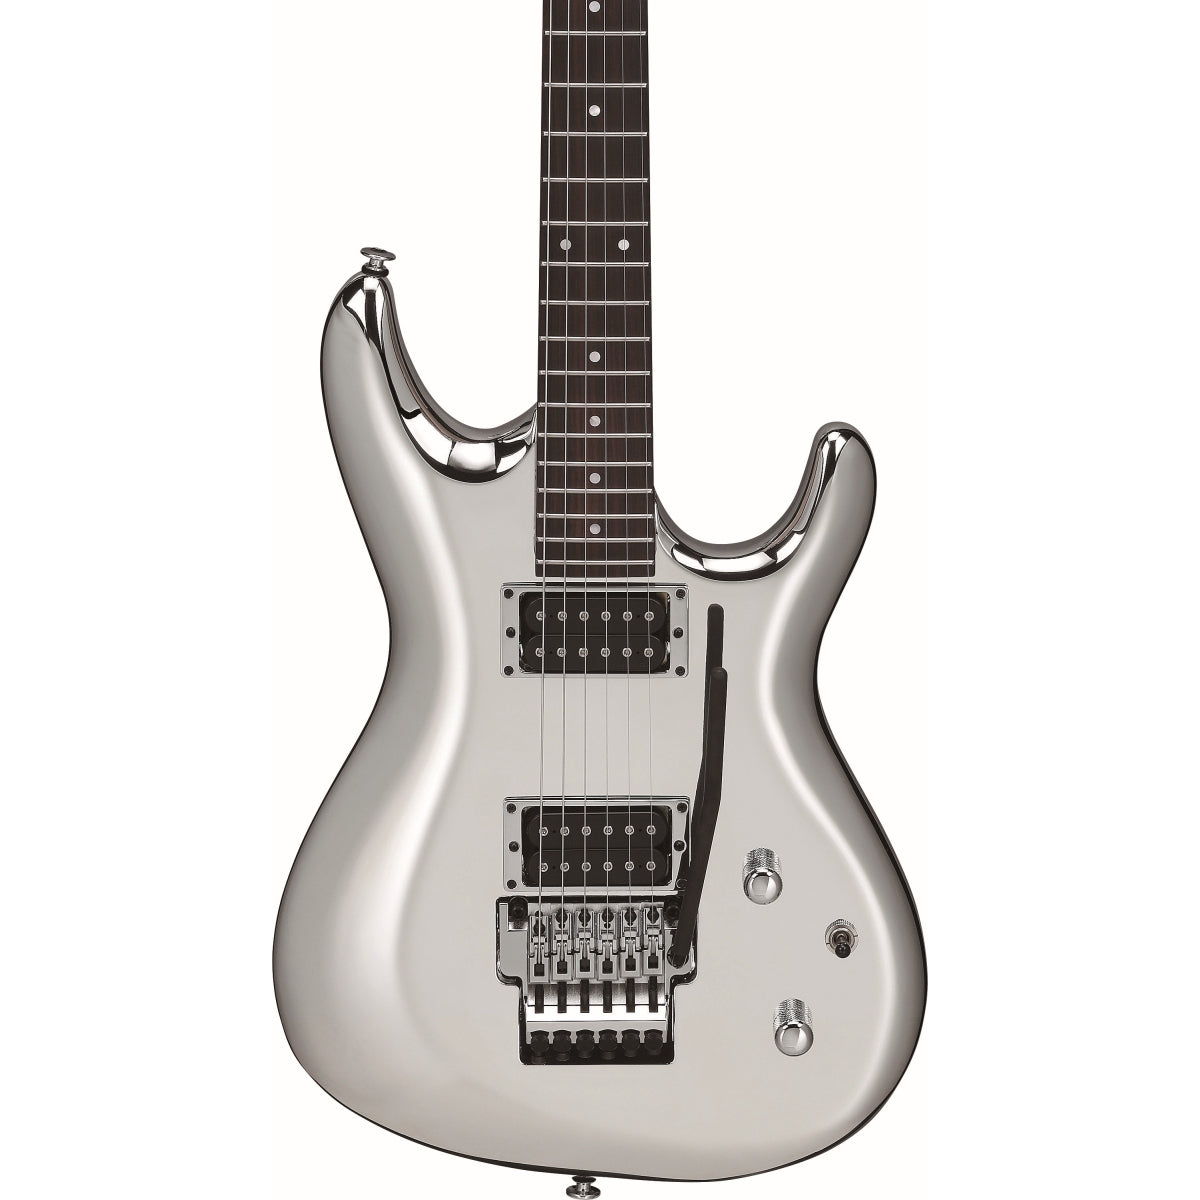 Ibanez / JS3CR Joe Satriani Signature Model "Chrome-Boy" Ibanez Joe Satriani [80]